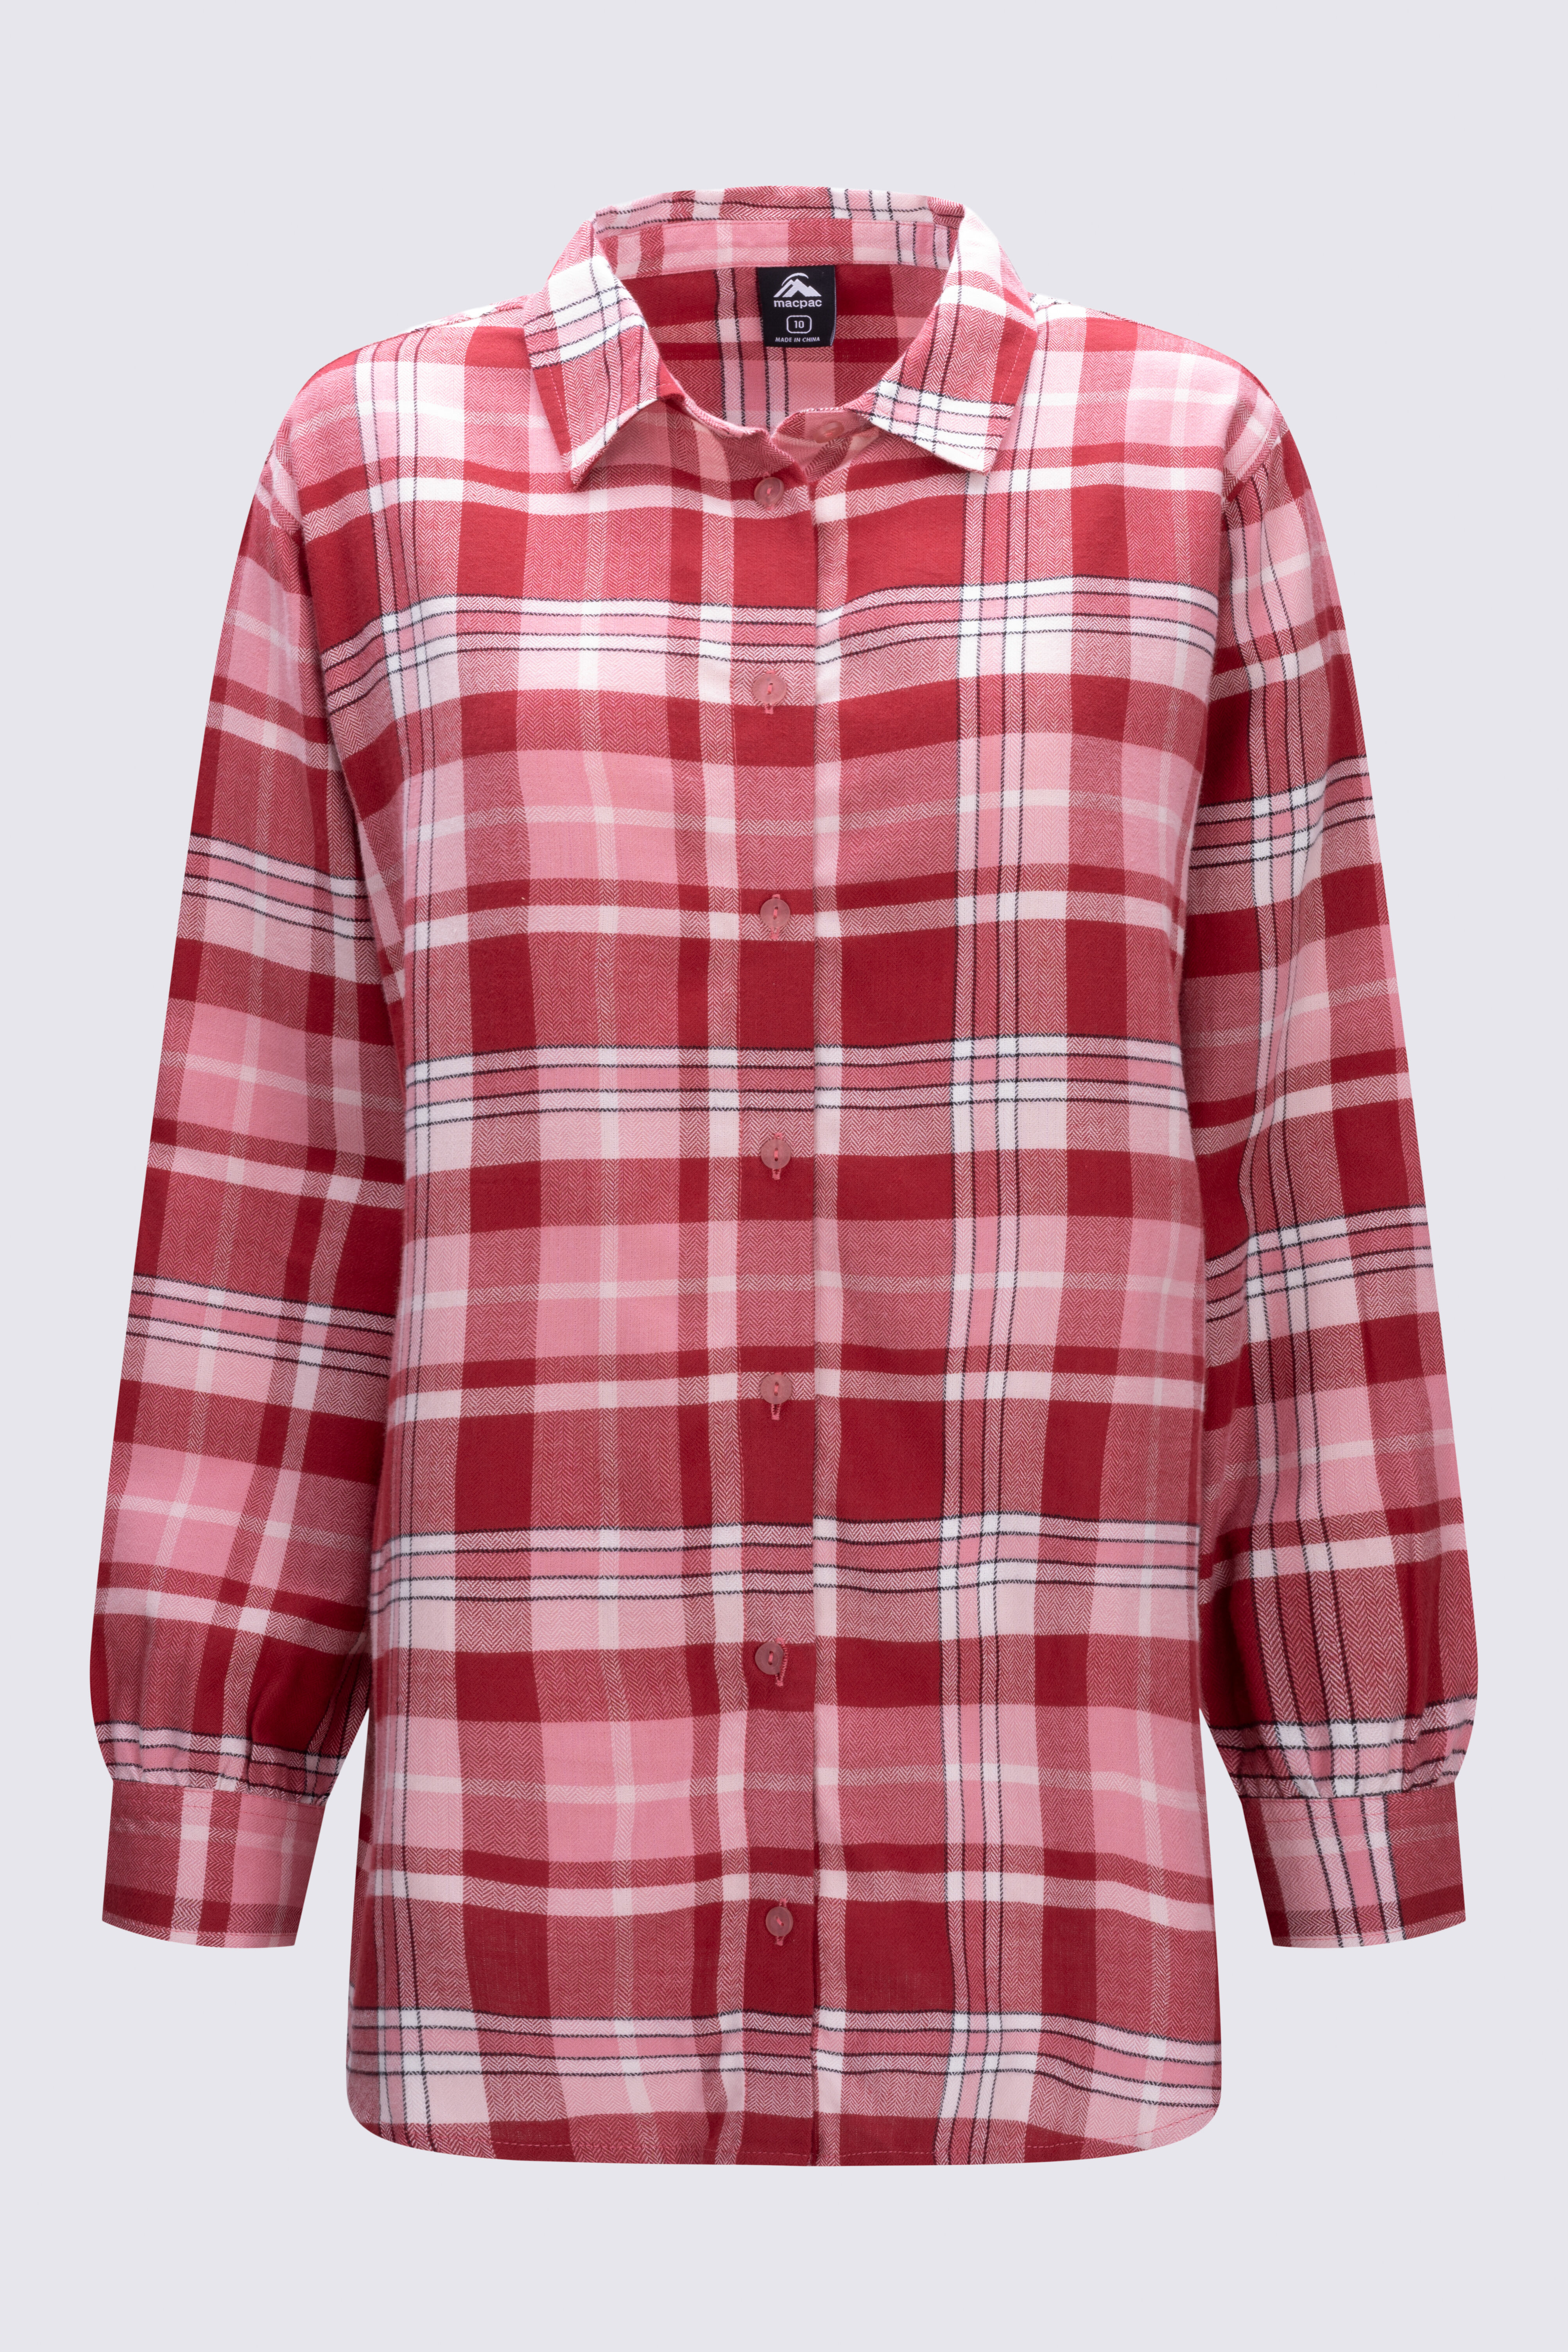 Macpac Women's Taylor Flannel Shirt | Macpac